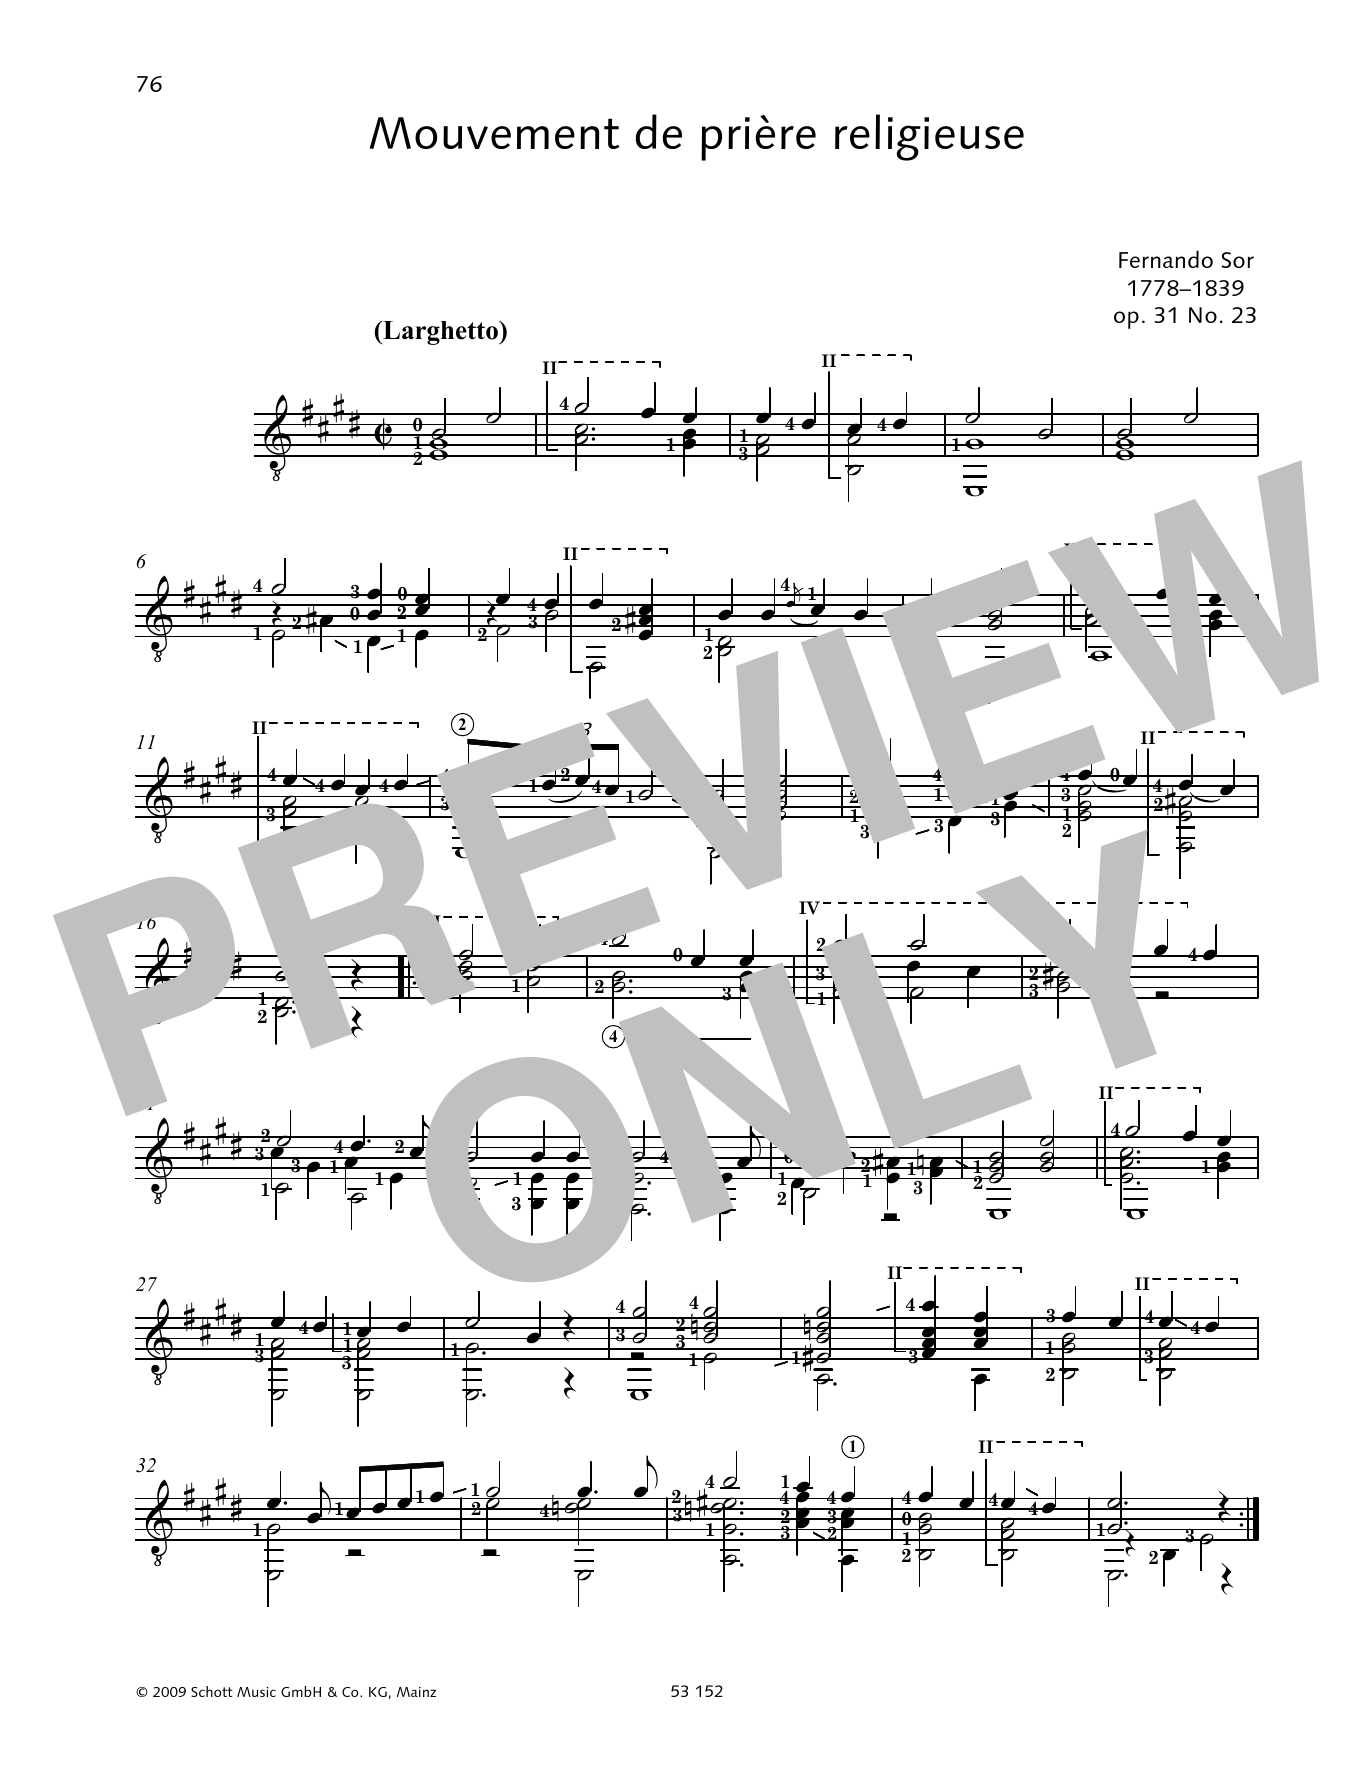 Fernando Sor Mouvement de prière religieuse Sheet Music Notes & Chords for Solo Guitar - Download or Print PDF